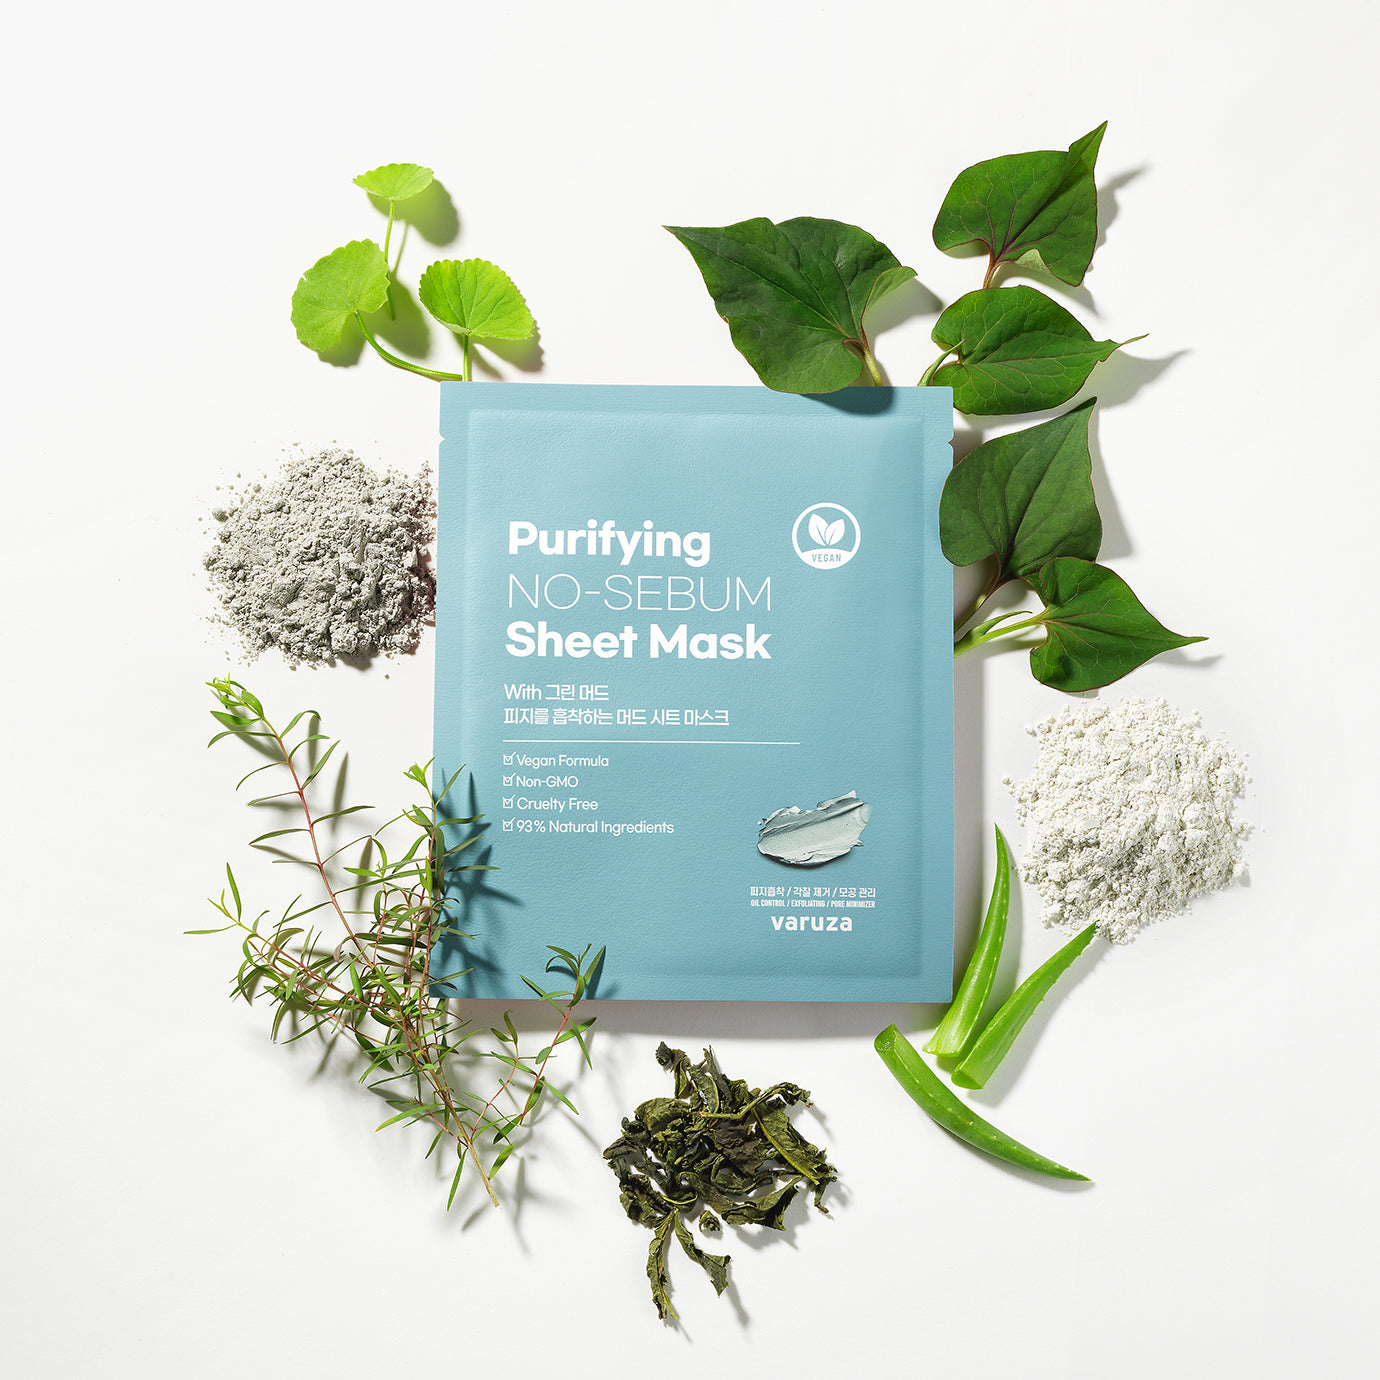 Purifying NO-SEBUM Sheet Mask with Green Mud